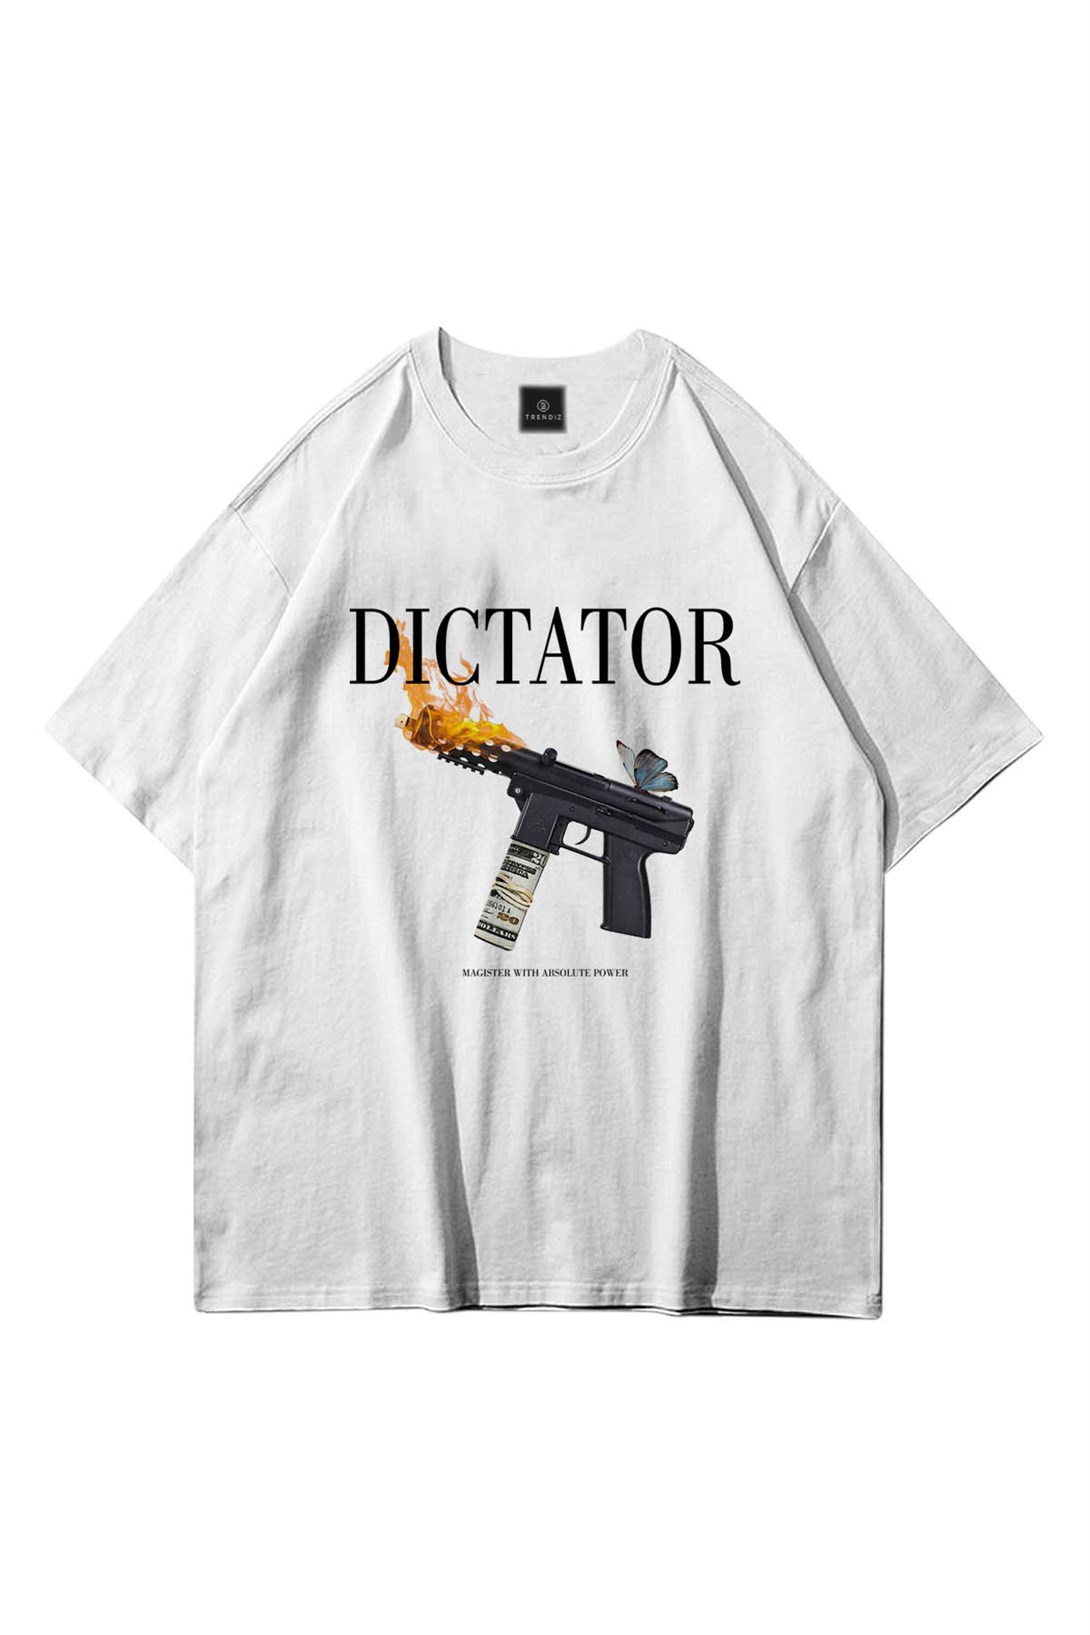 Trendiz Unisex Dictator Beyaz Tshirt